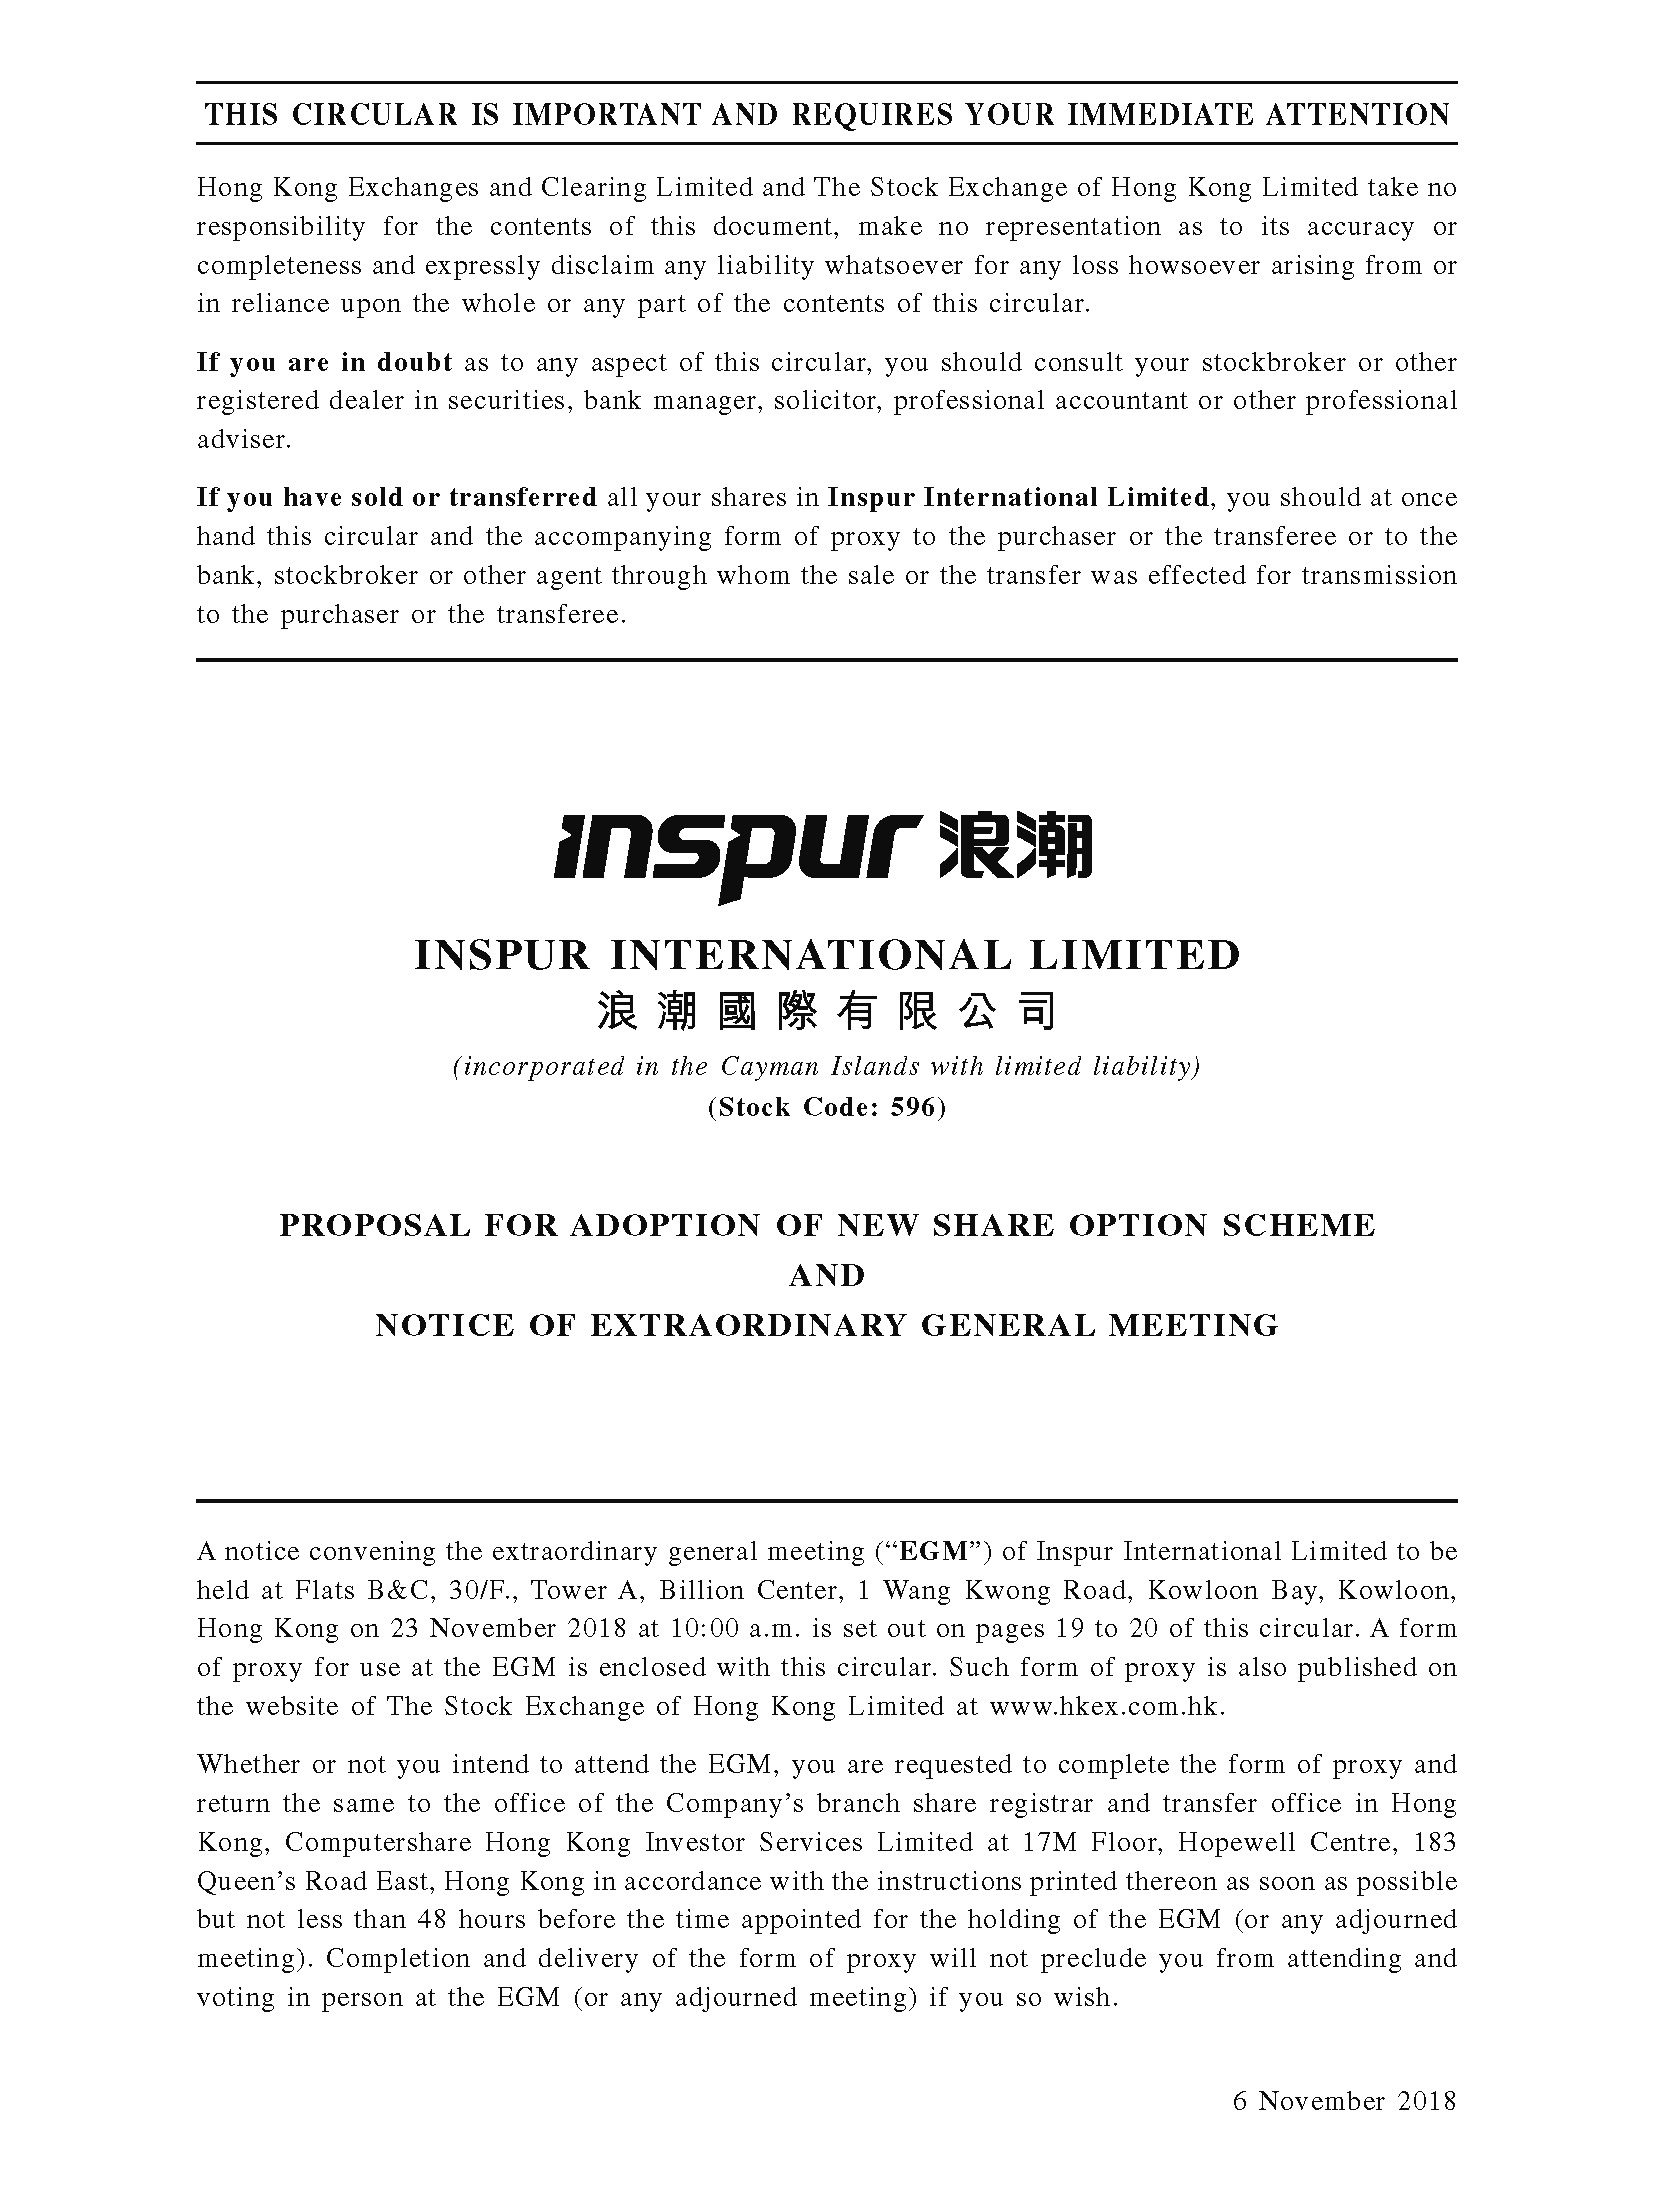 Inspur International Limited